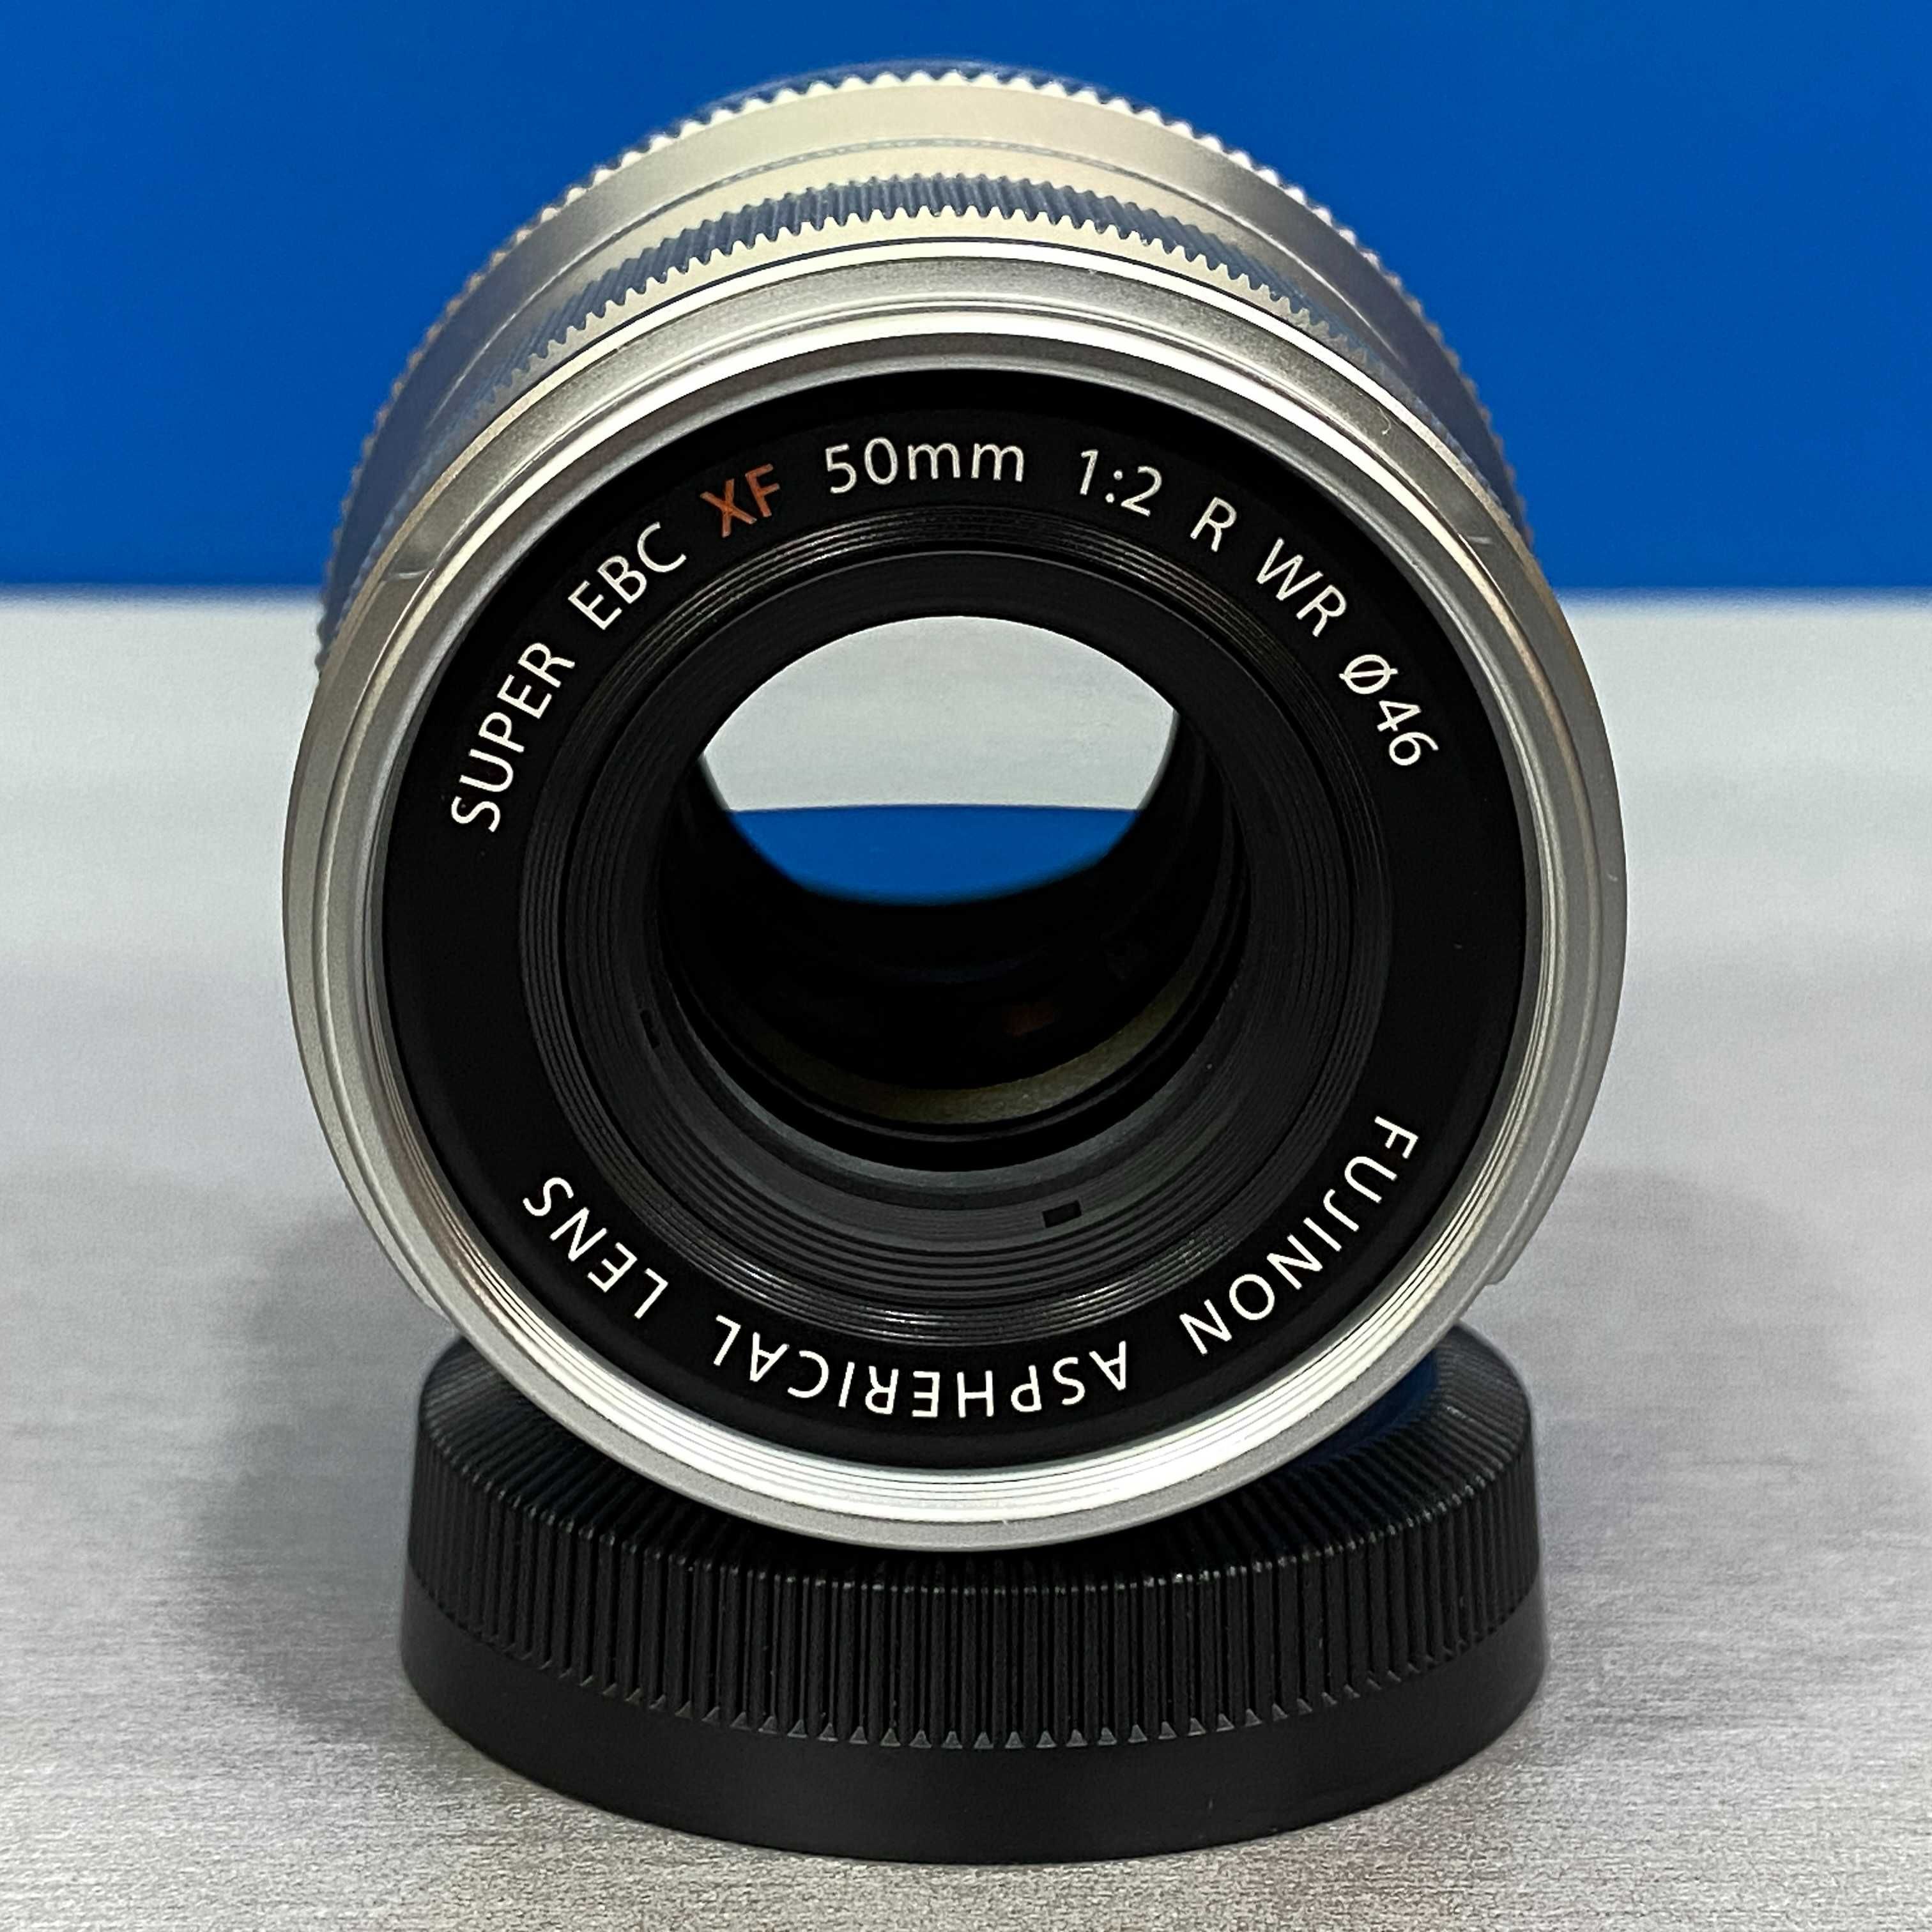 Fujifilm XF 50mm f/2 R WR (3 ANOS DE GARANTIA)